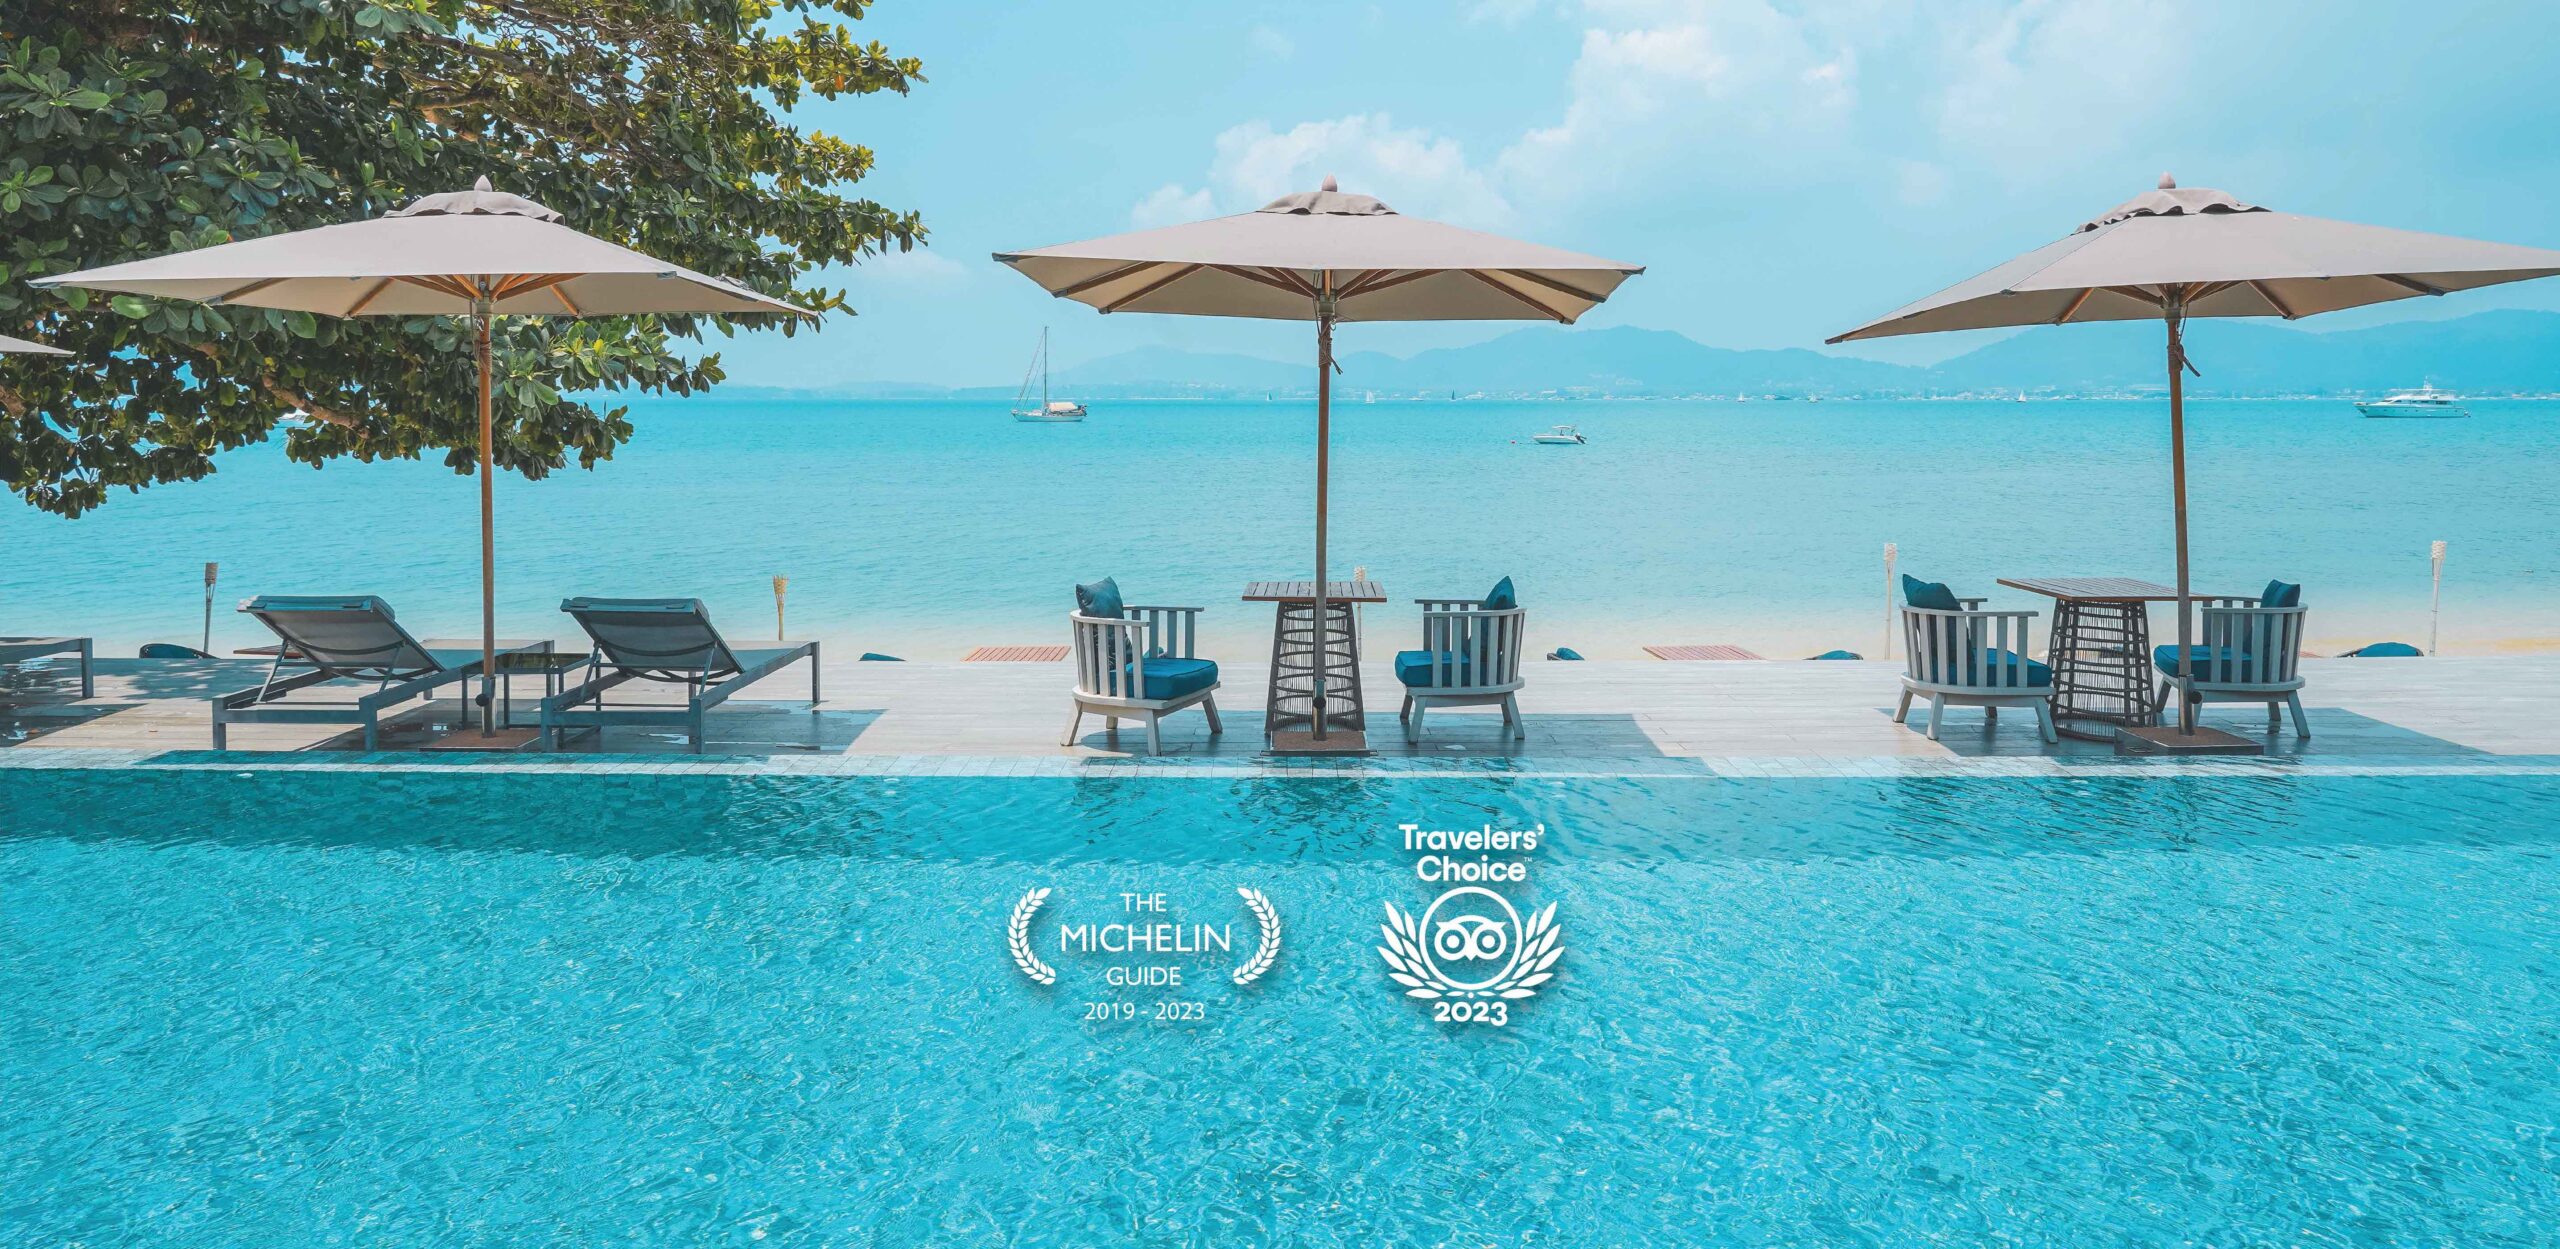 My Beach Resort Phuket - Website Banner (Michelin Guide 2023 + Tripadvisor Travelers' Choice 2023)